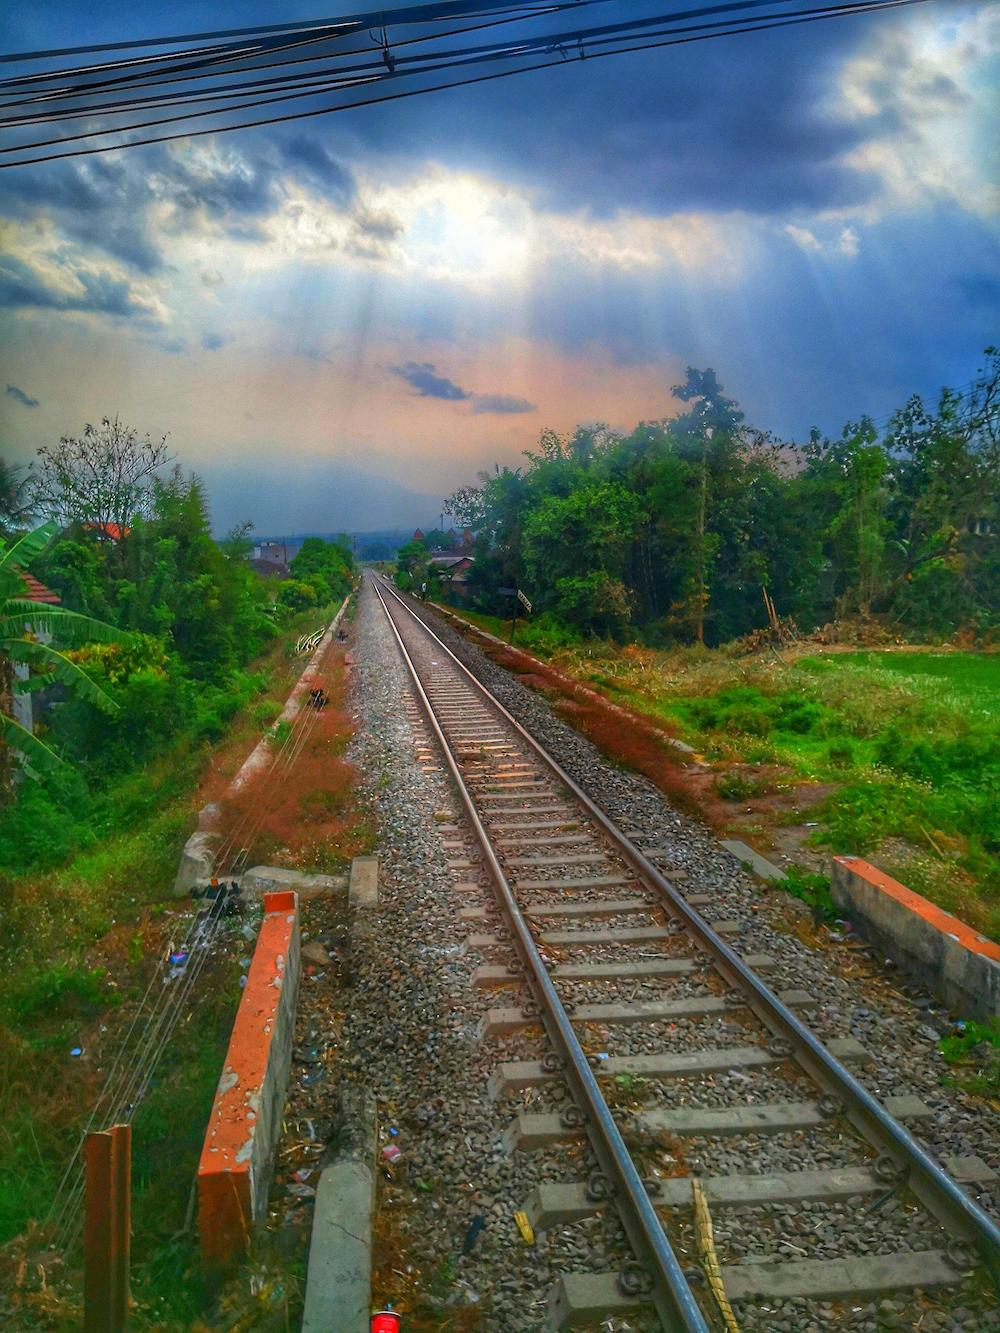 shot-while-crossing-railway-tracks-in-indonesia-v0-pf0nbzr3l5va1.jpg